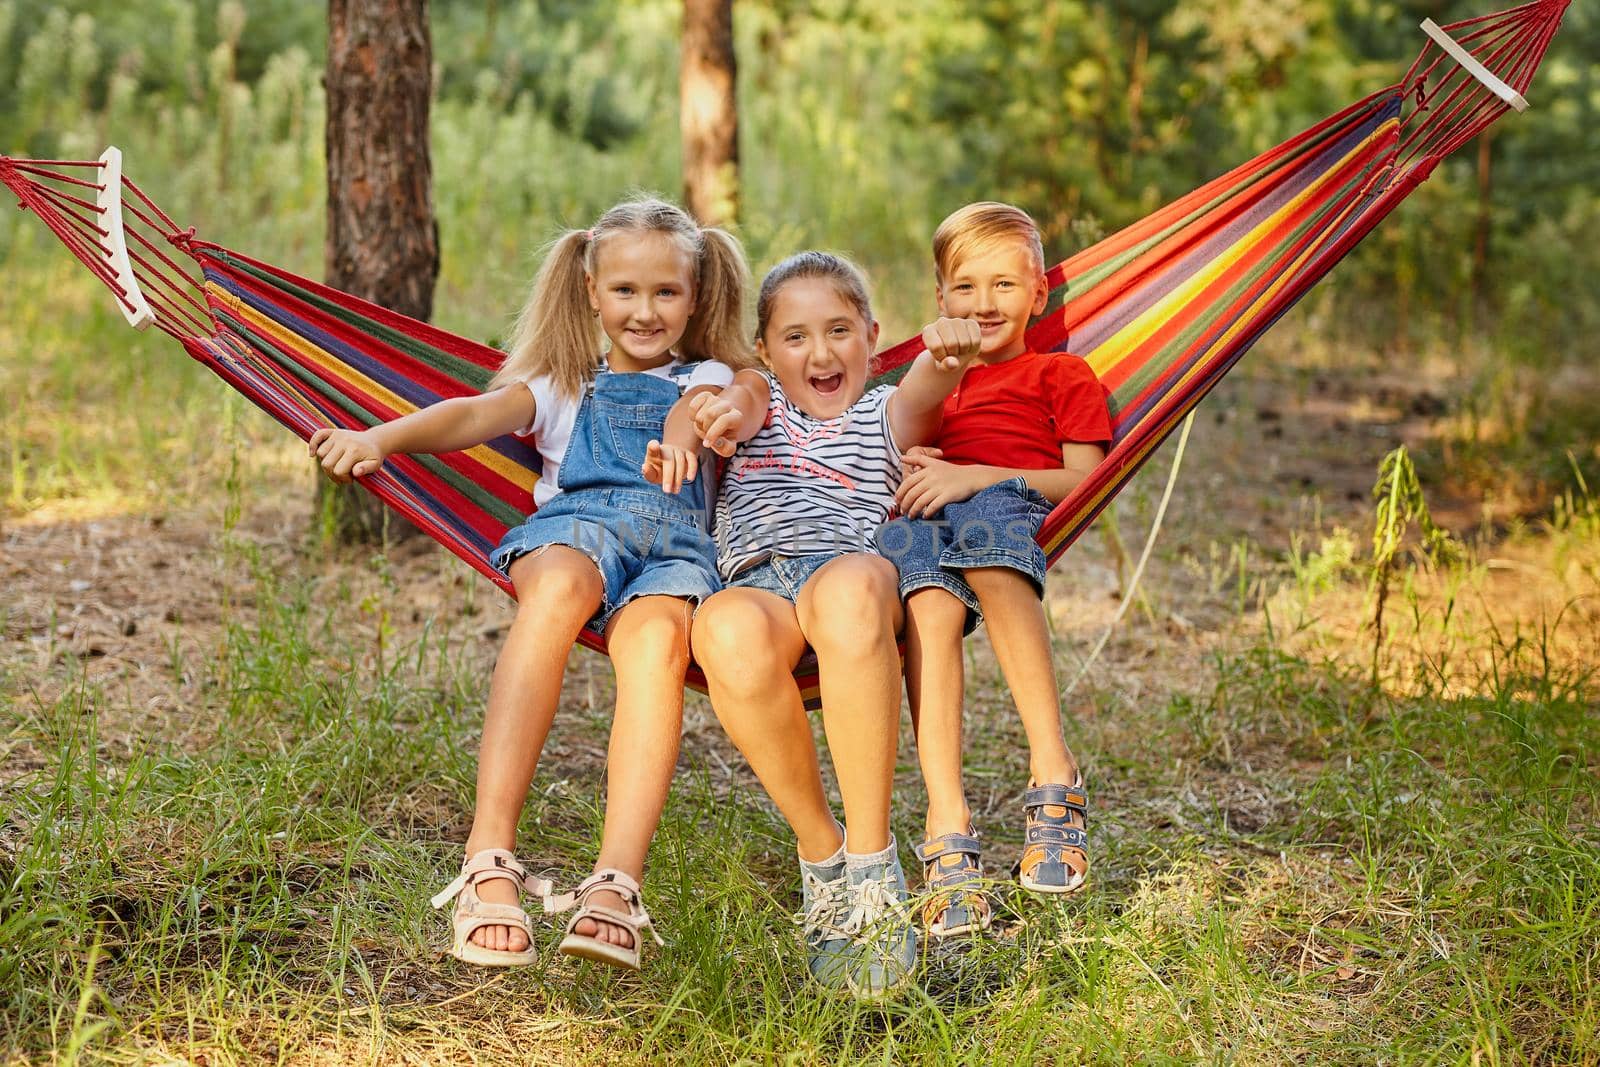 three cheerful children joke, outdoor, sitting on a colorful hammock. Summer fun and leisure